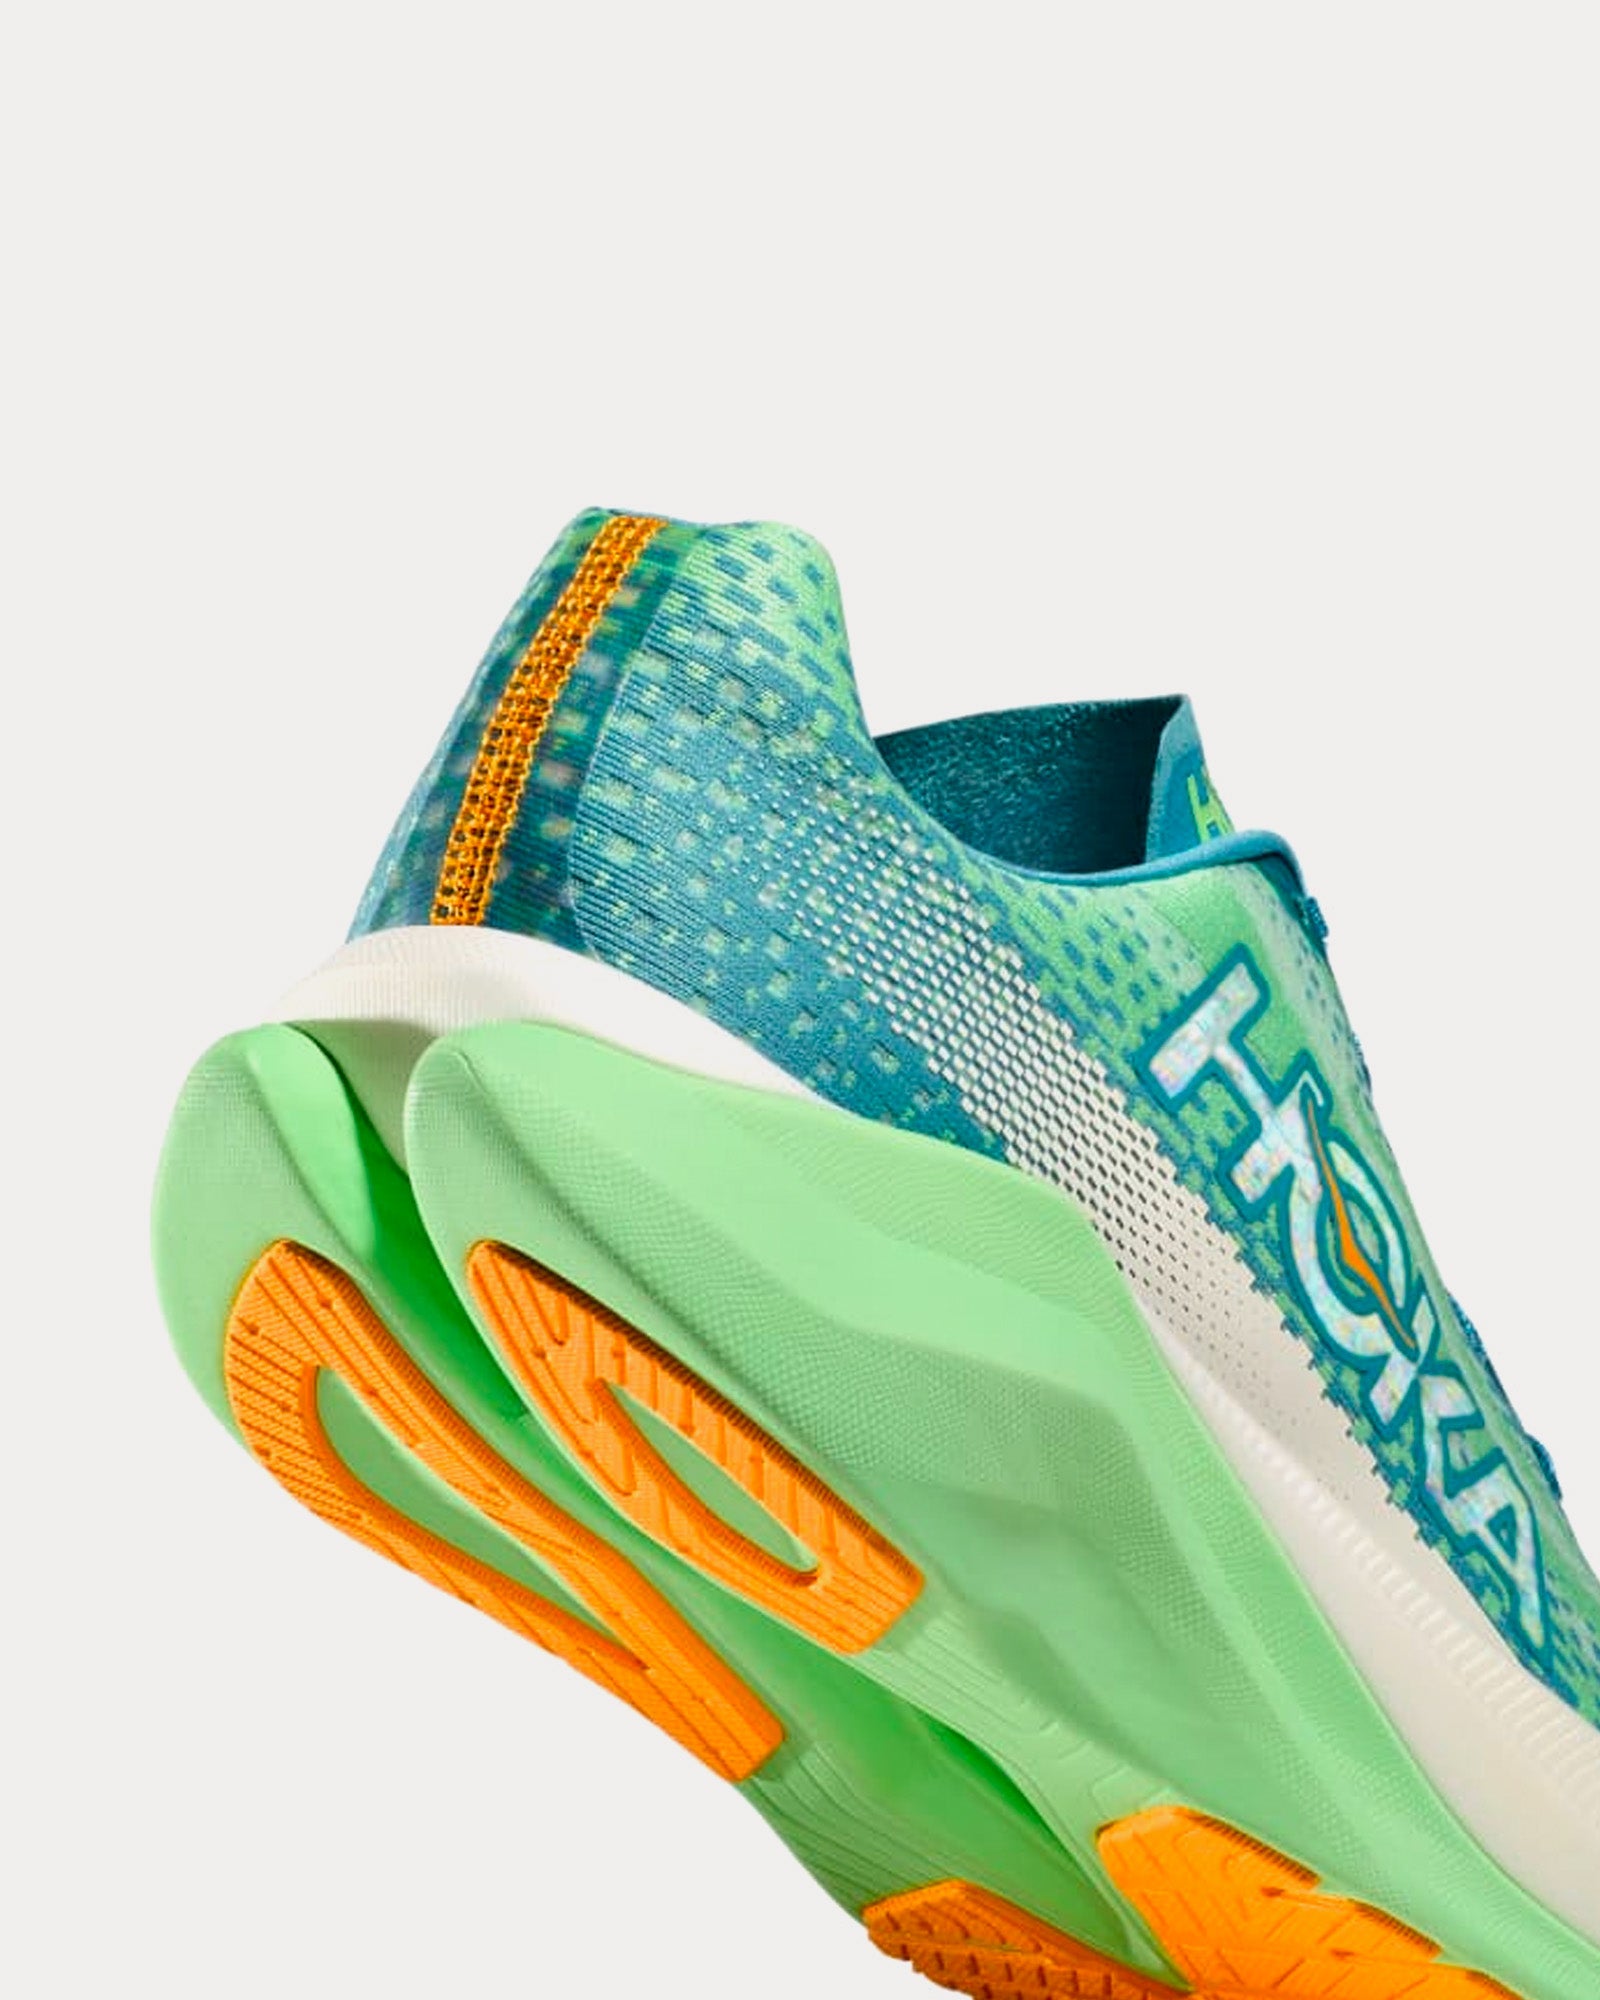 Hoka - Mach X Ocean Mist / Lime Glow Running Shoes